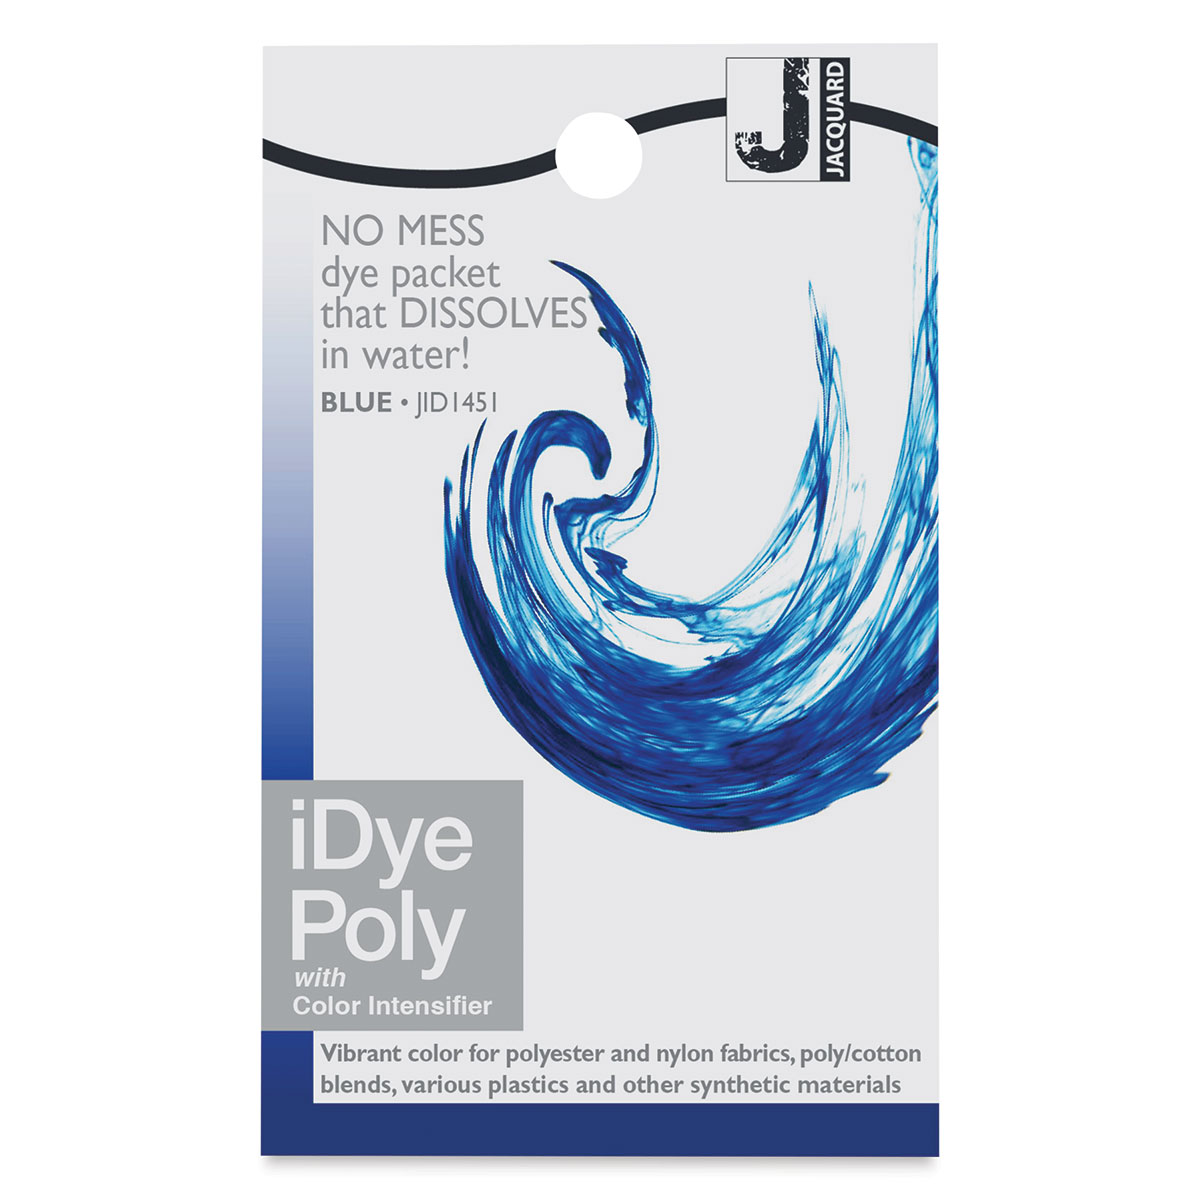 Jacquard iDye Poly Polyester/Nylon BLICK | Art Materials for